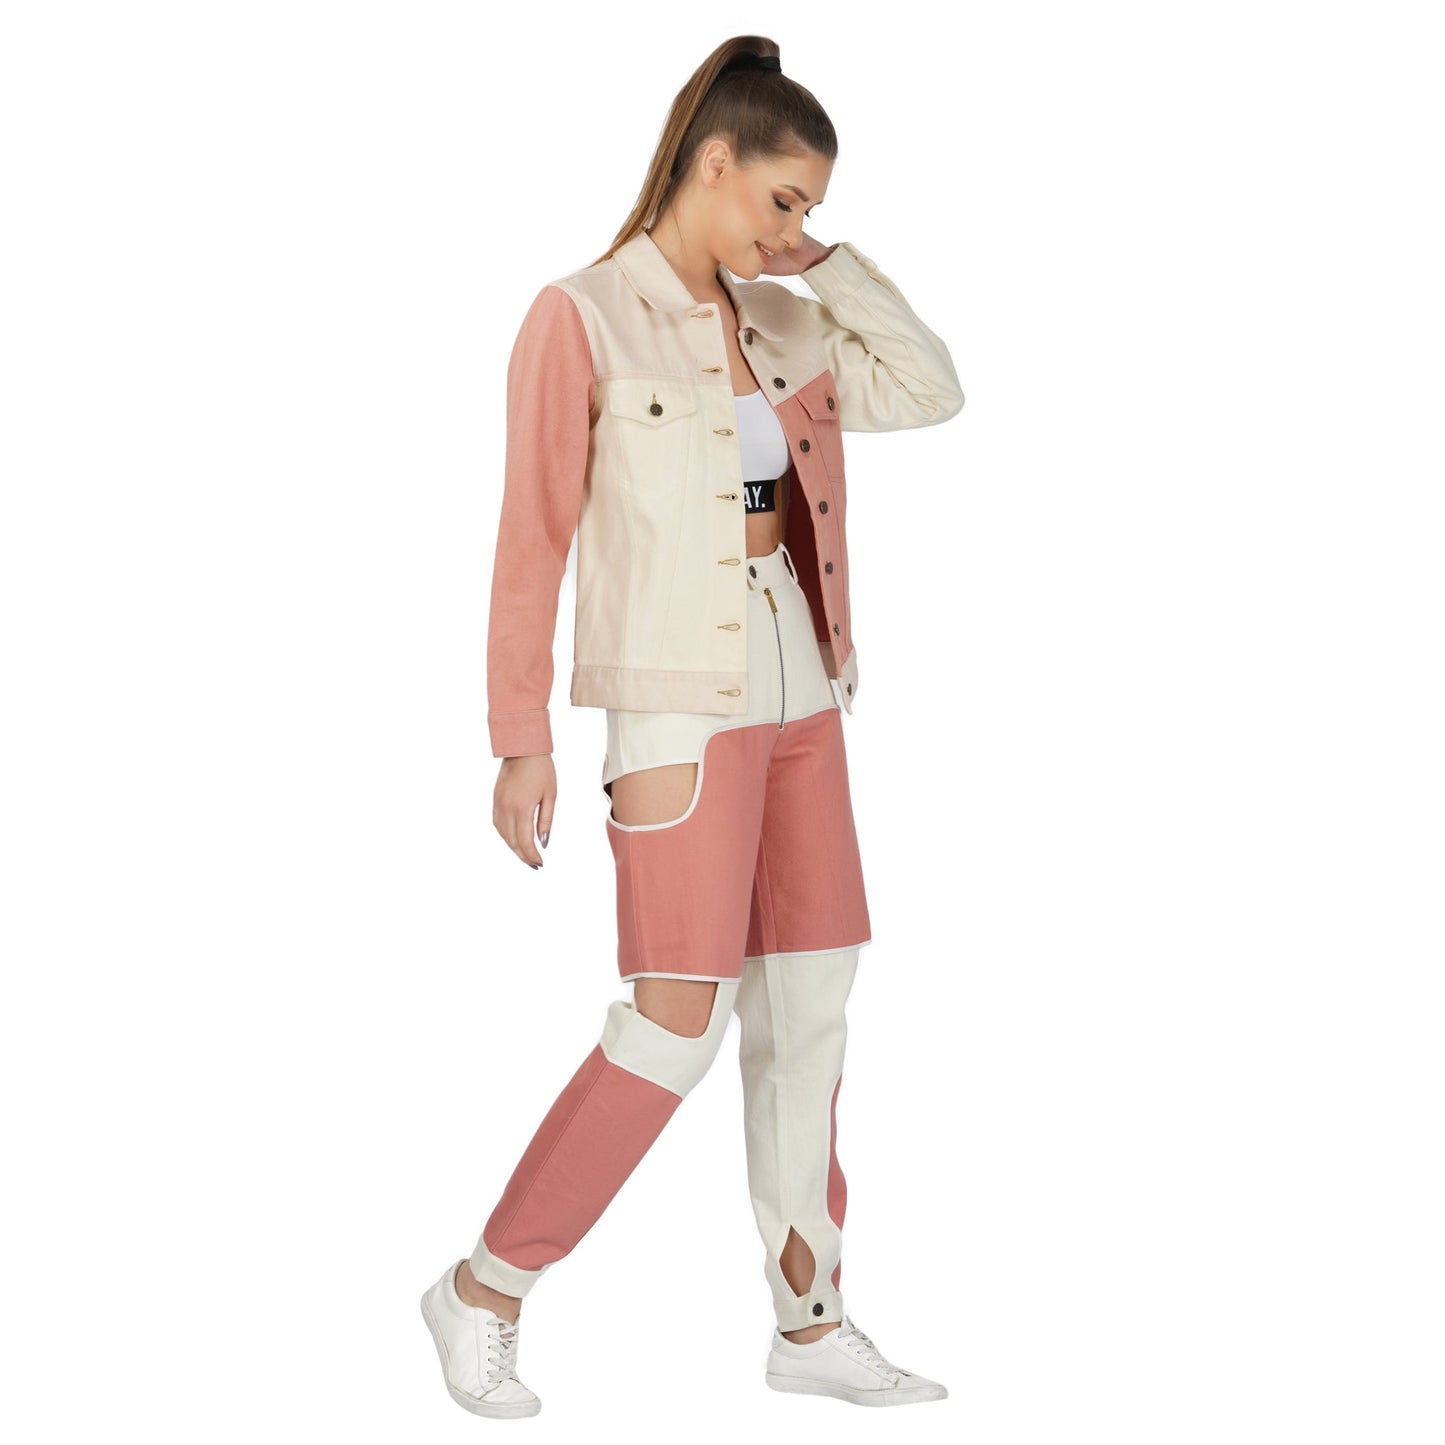 SLAY. Women's Side Cutout Pink & White Colorblock Denim Jeans